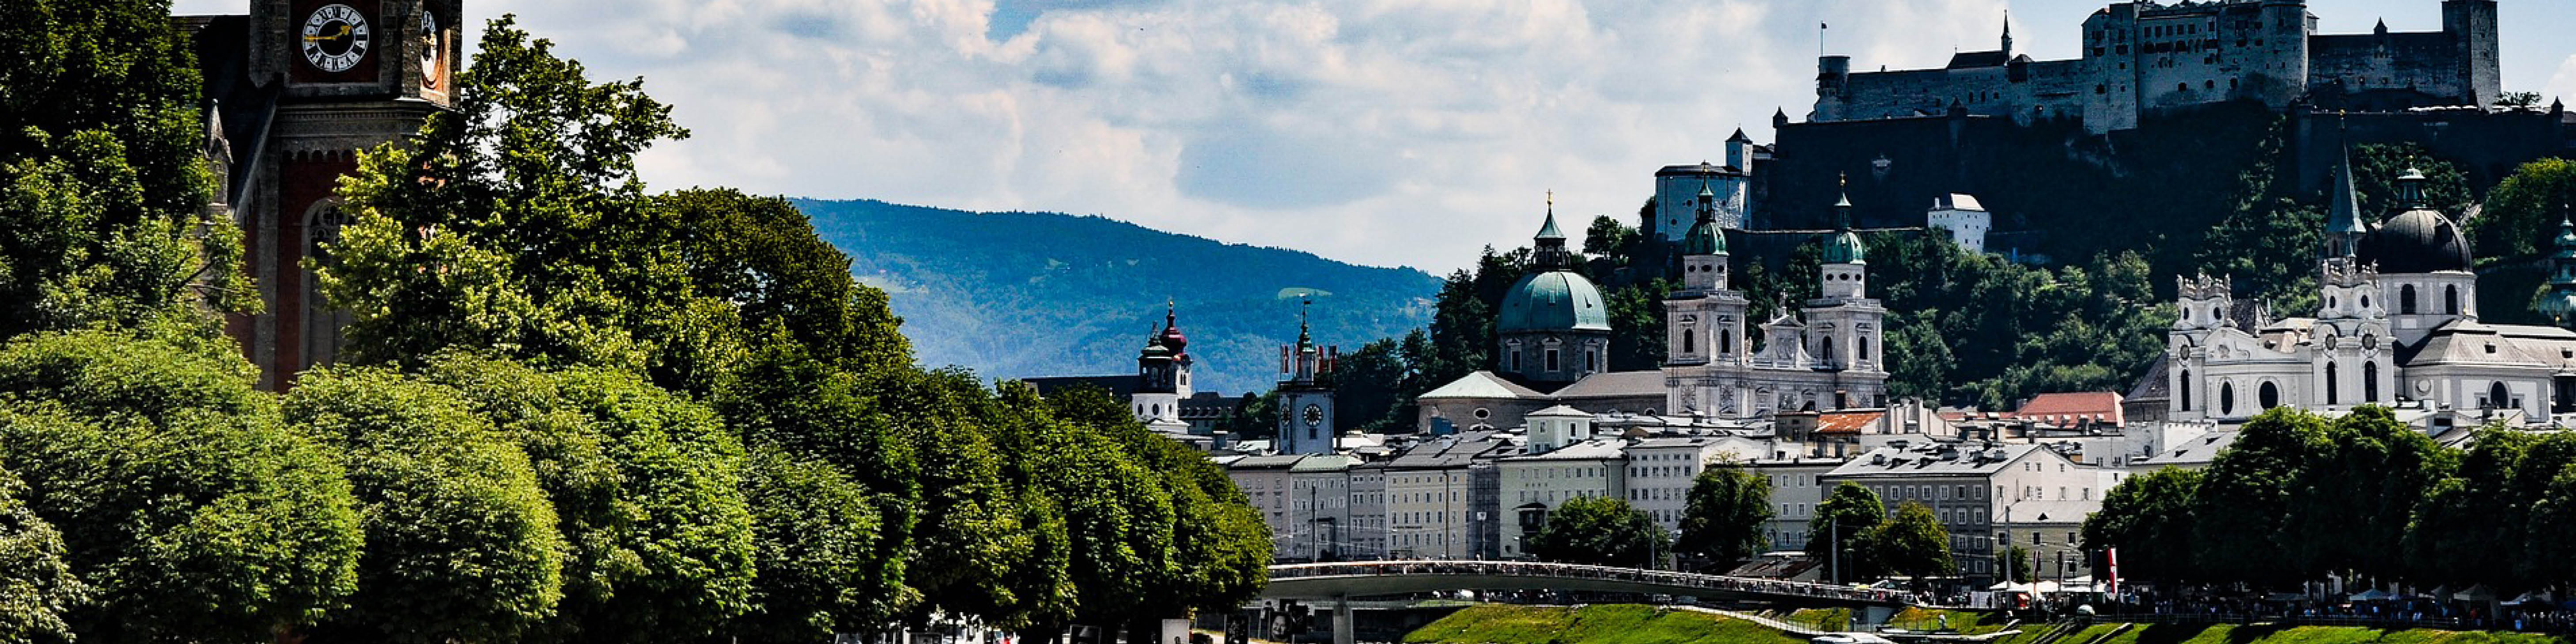 CITY OF SALTZBURG, AUSTRIA